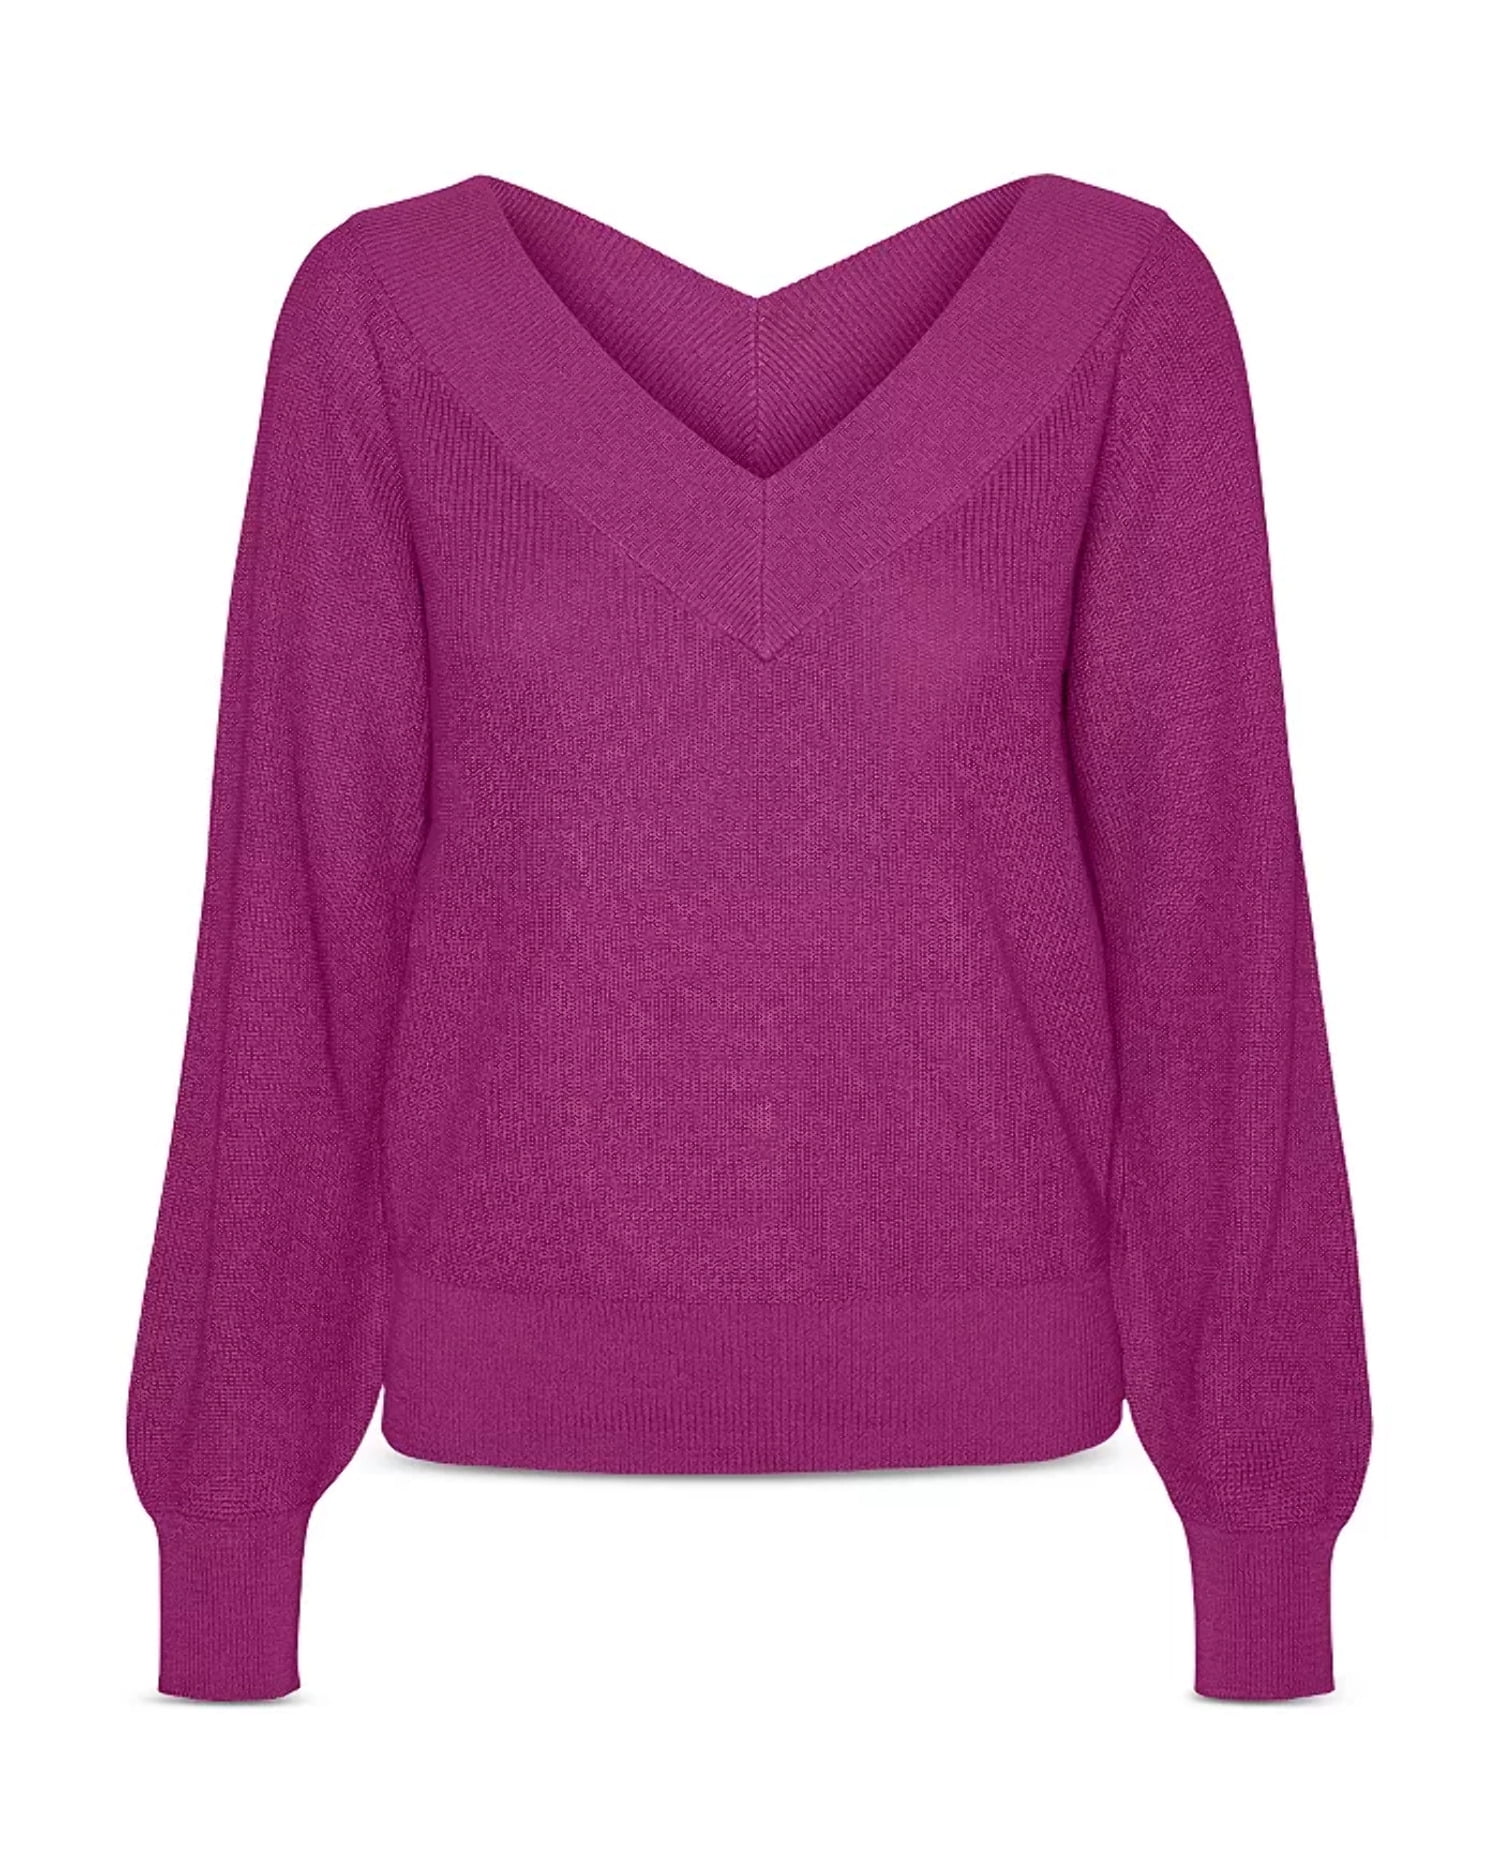 Vero Moda Newlexsun Double V Neck Sweater MSRP $55 Size XS - Walmart.com